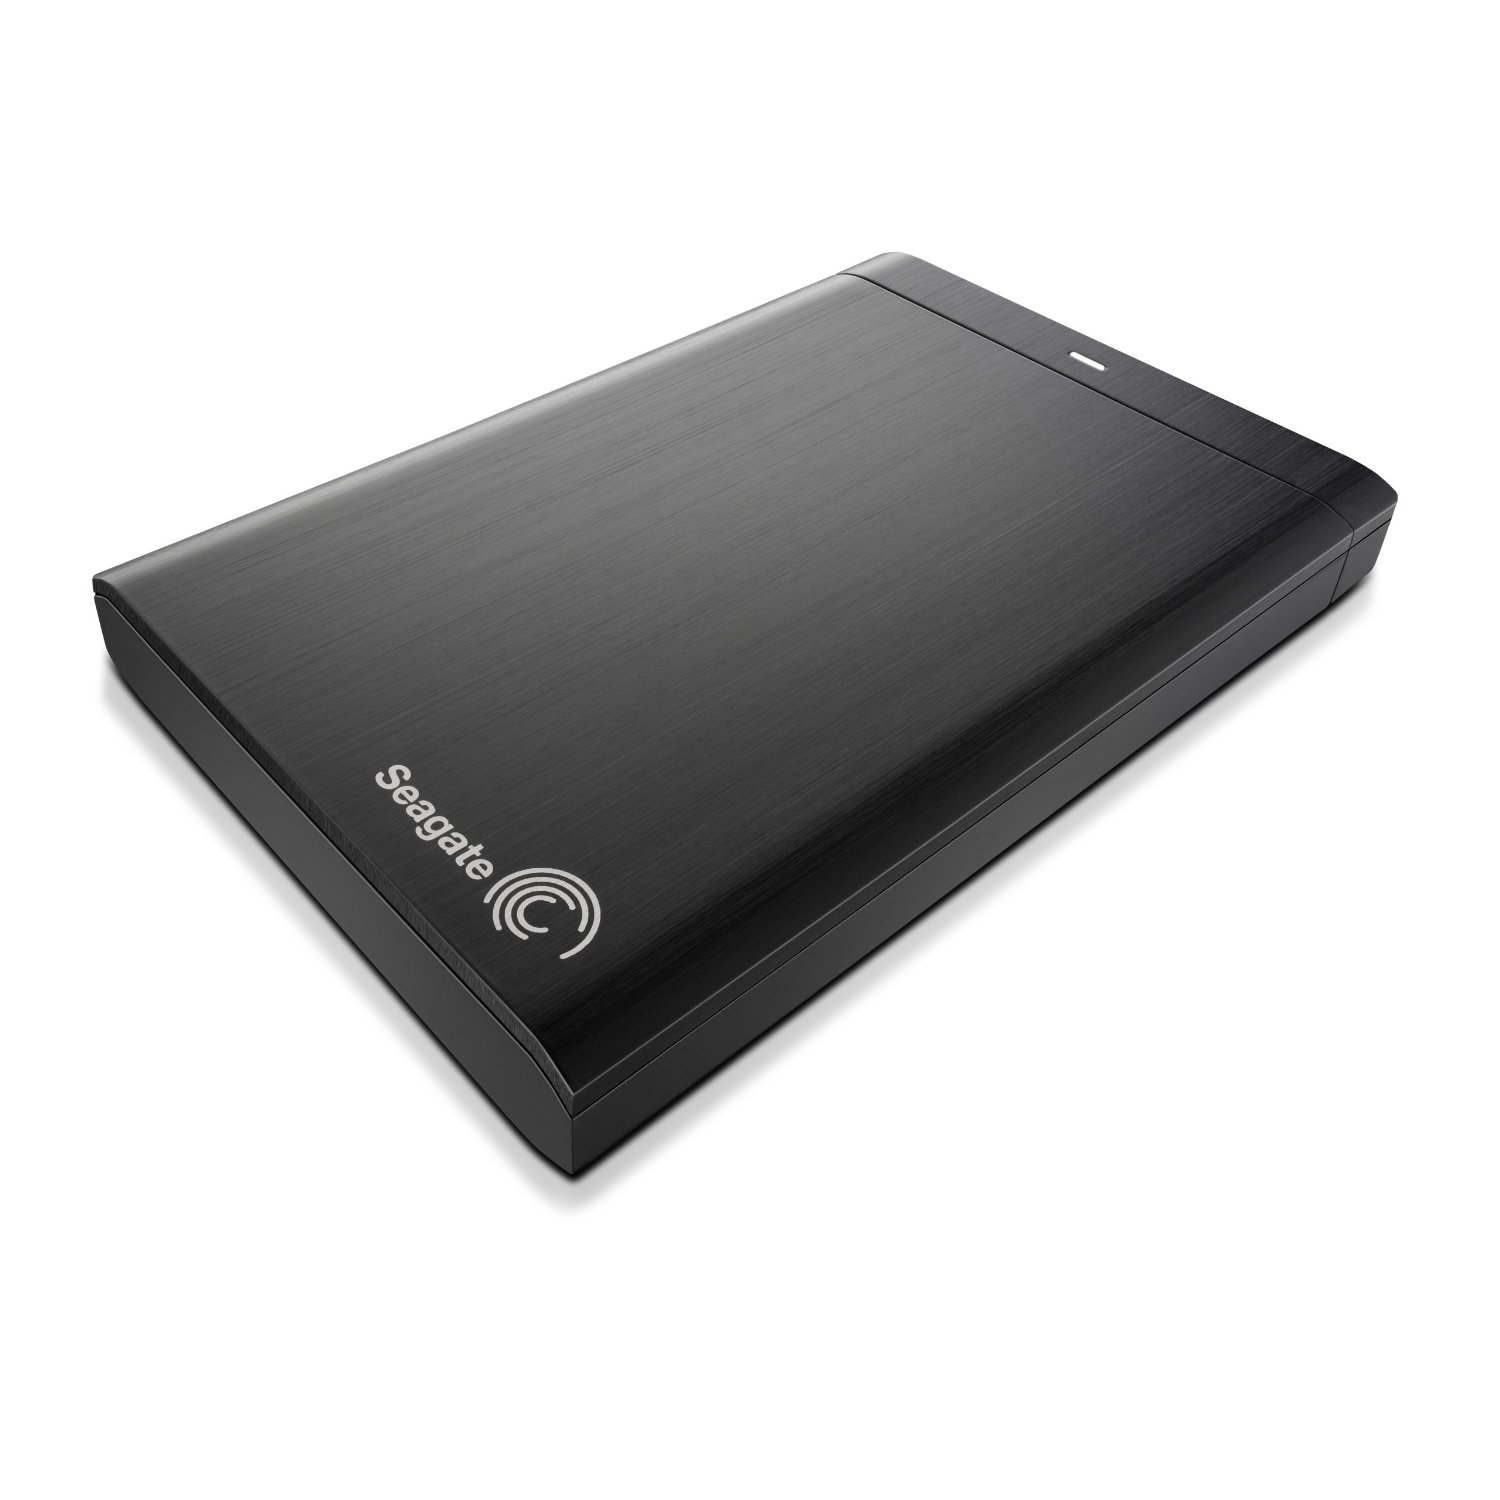 Seagate Backup Plus 1 Terabyte Portable Hard Drive For